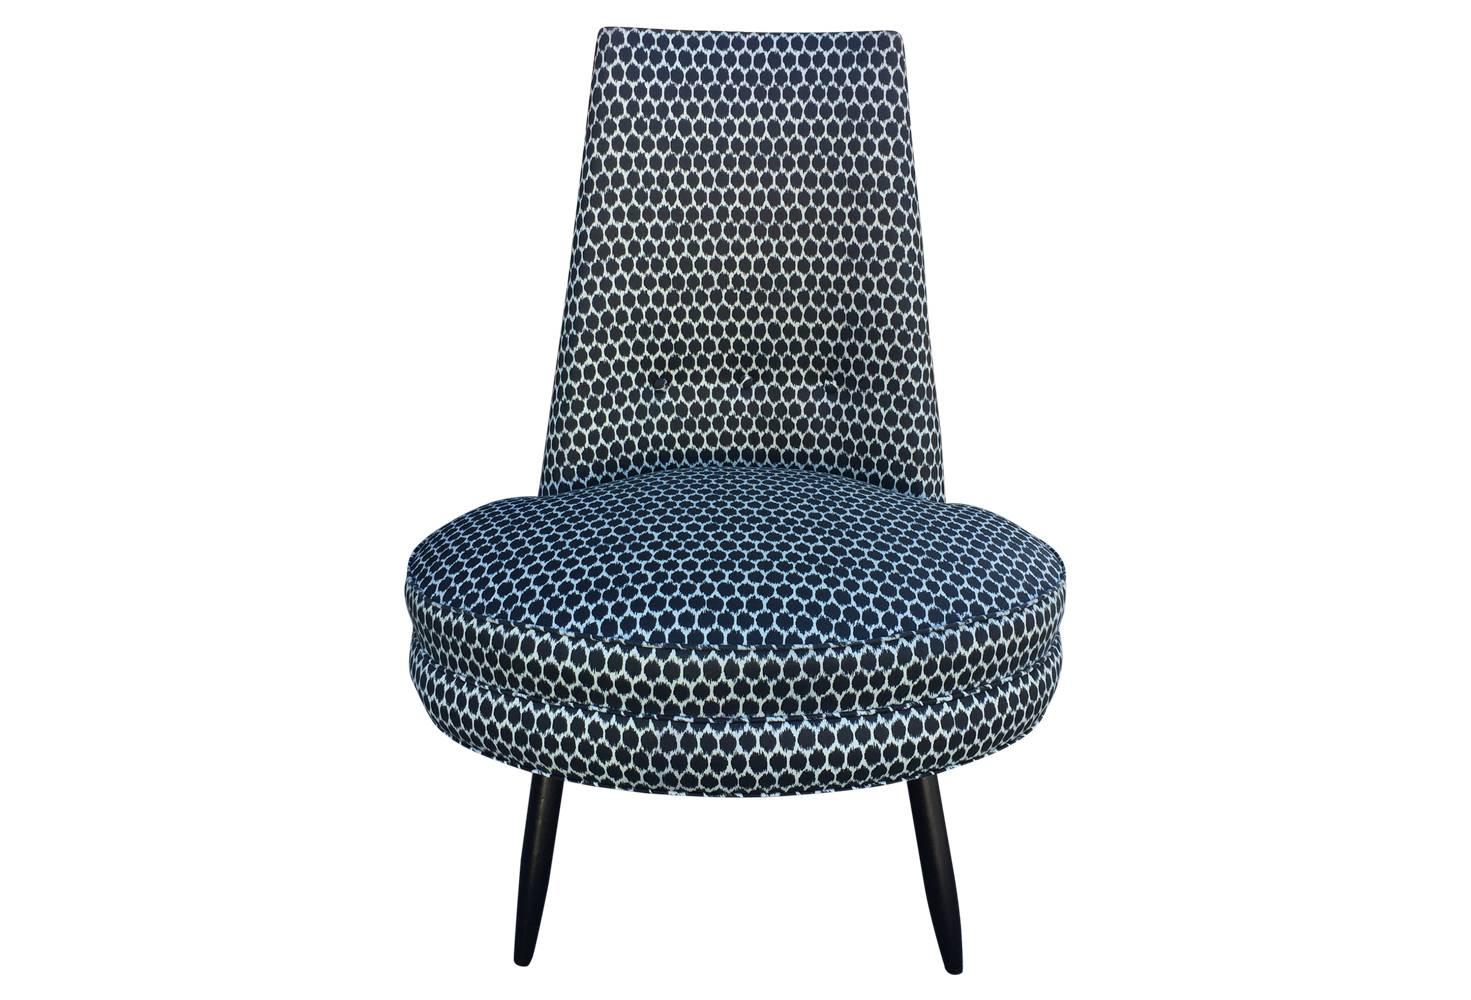 American Charcoal Grey and White Ikat Polka Dot Mid-Century Modern High Back Chair